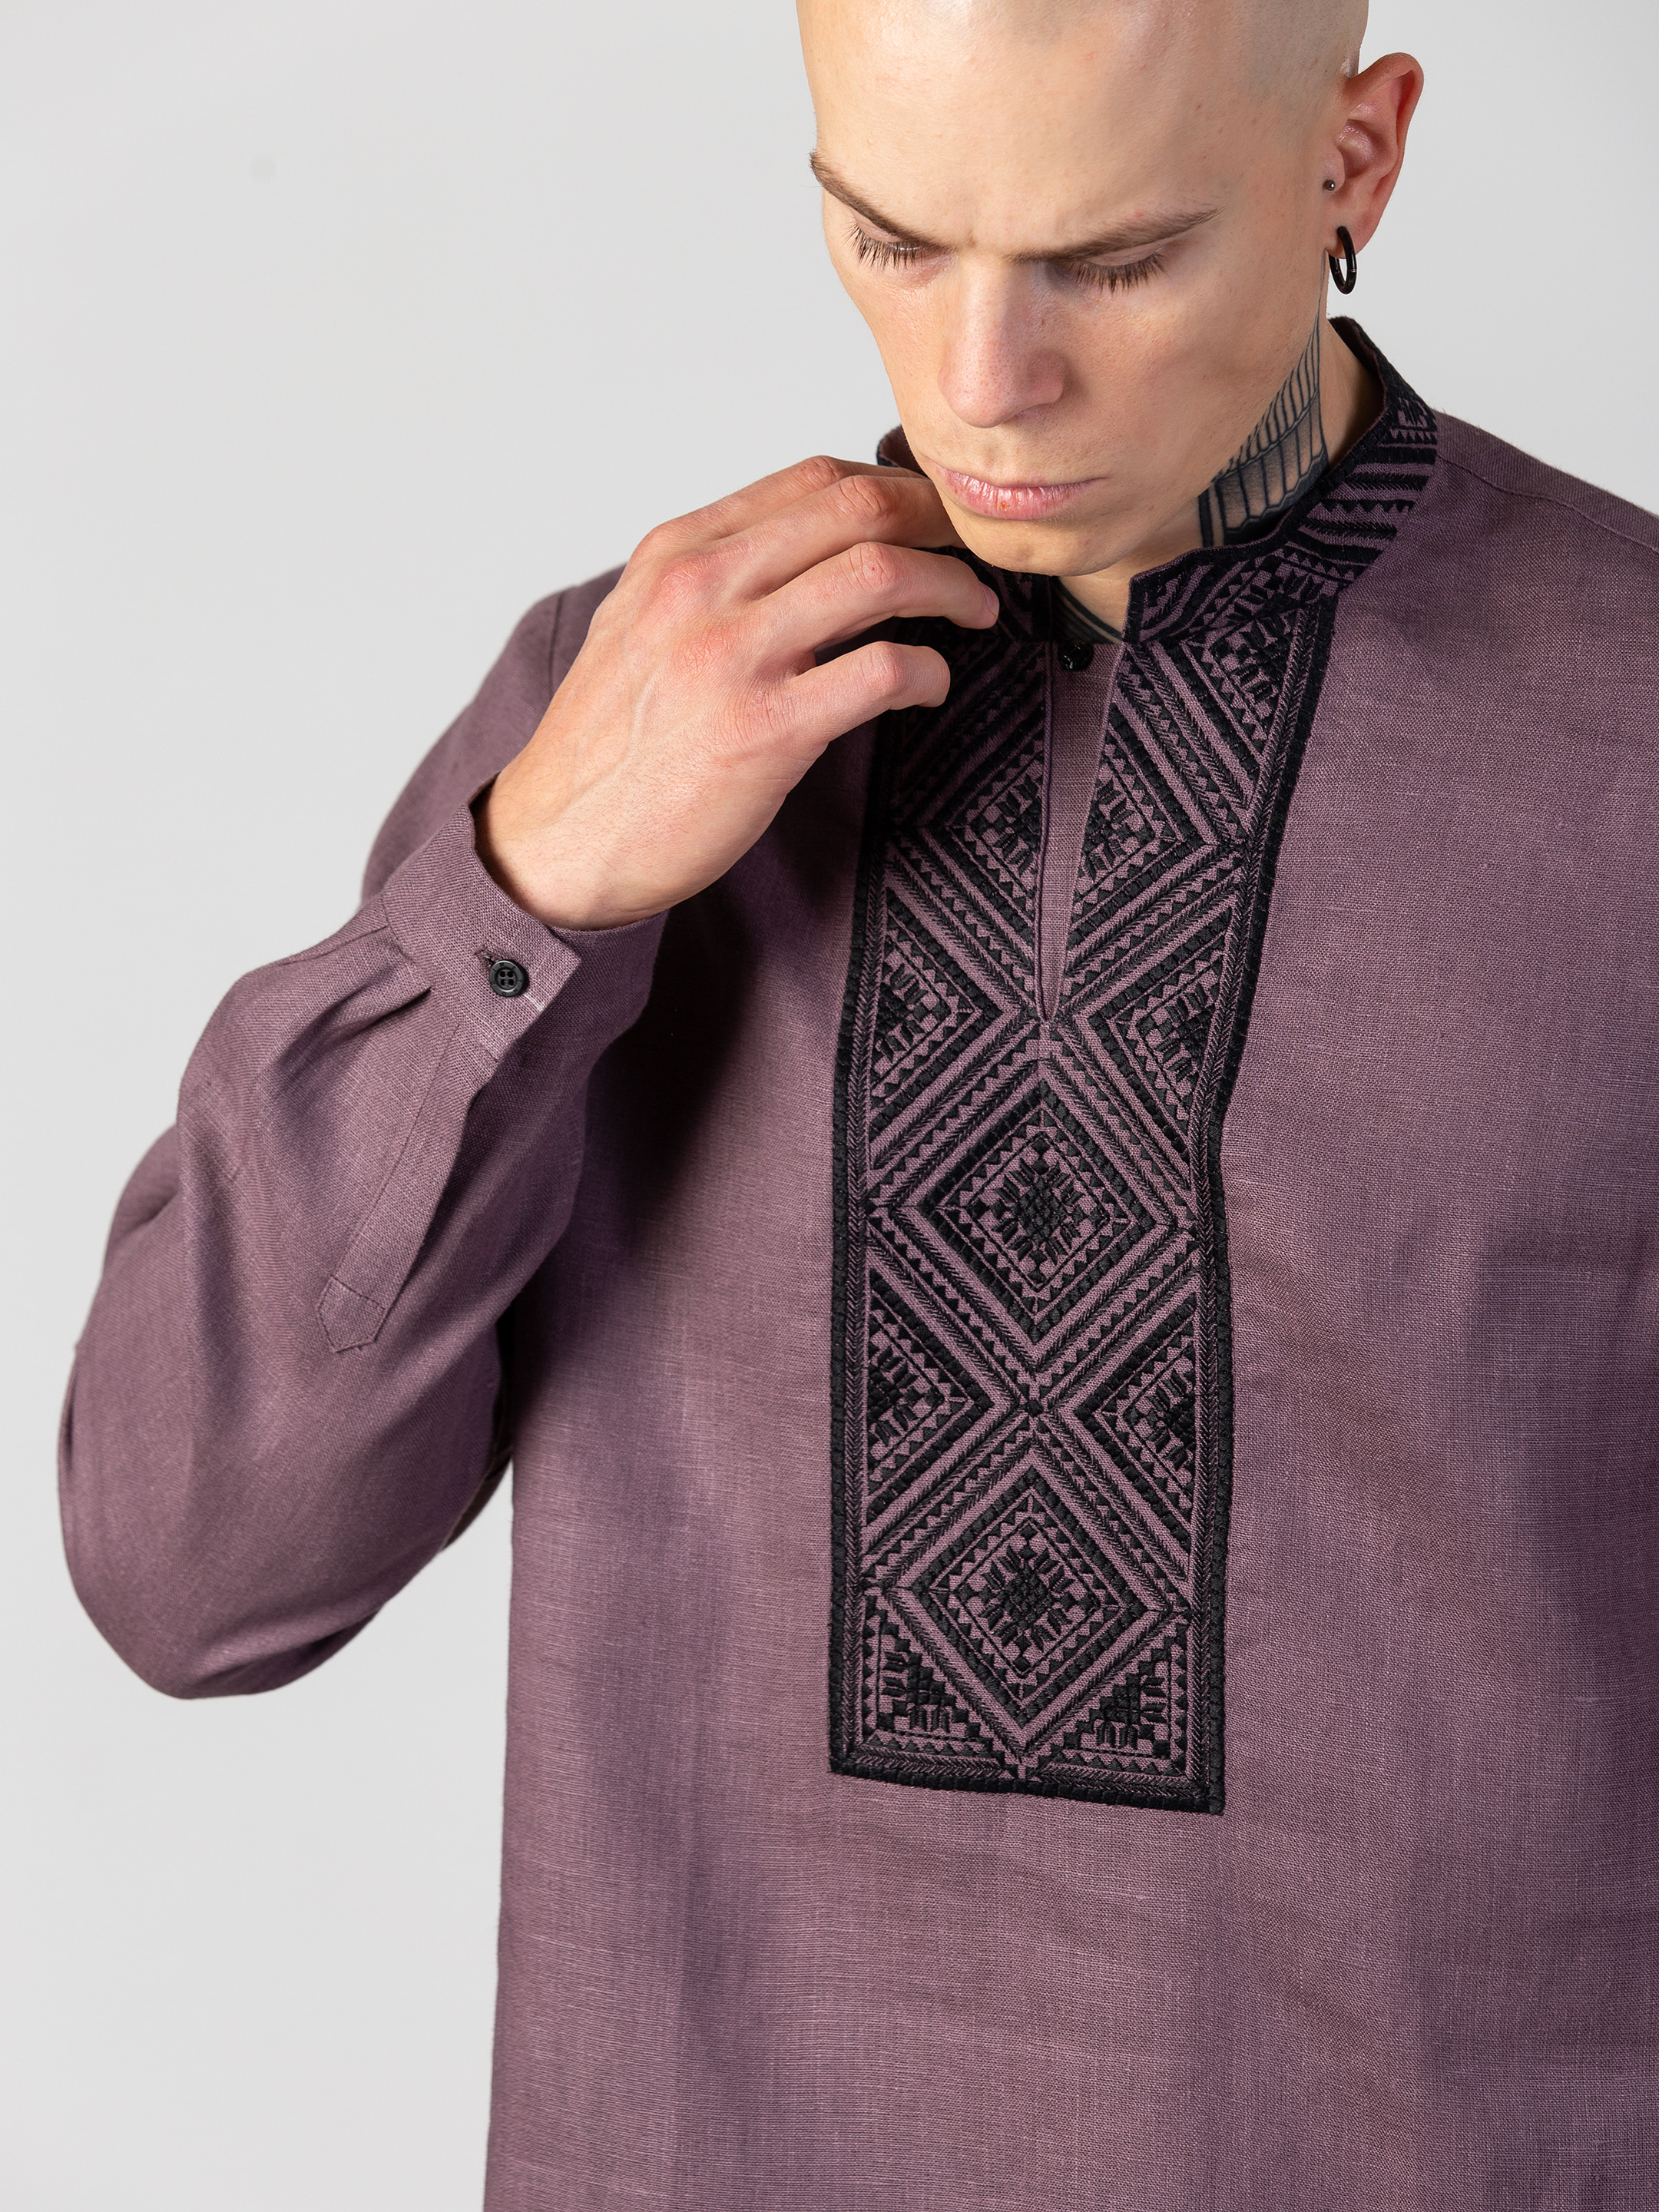 Men's shirt with a black geometric ornament Troyan Dark - photo 1